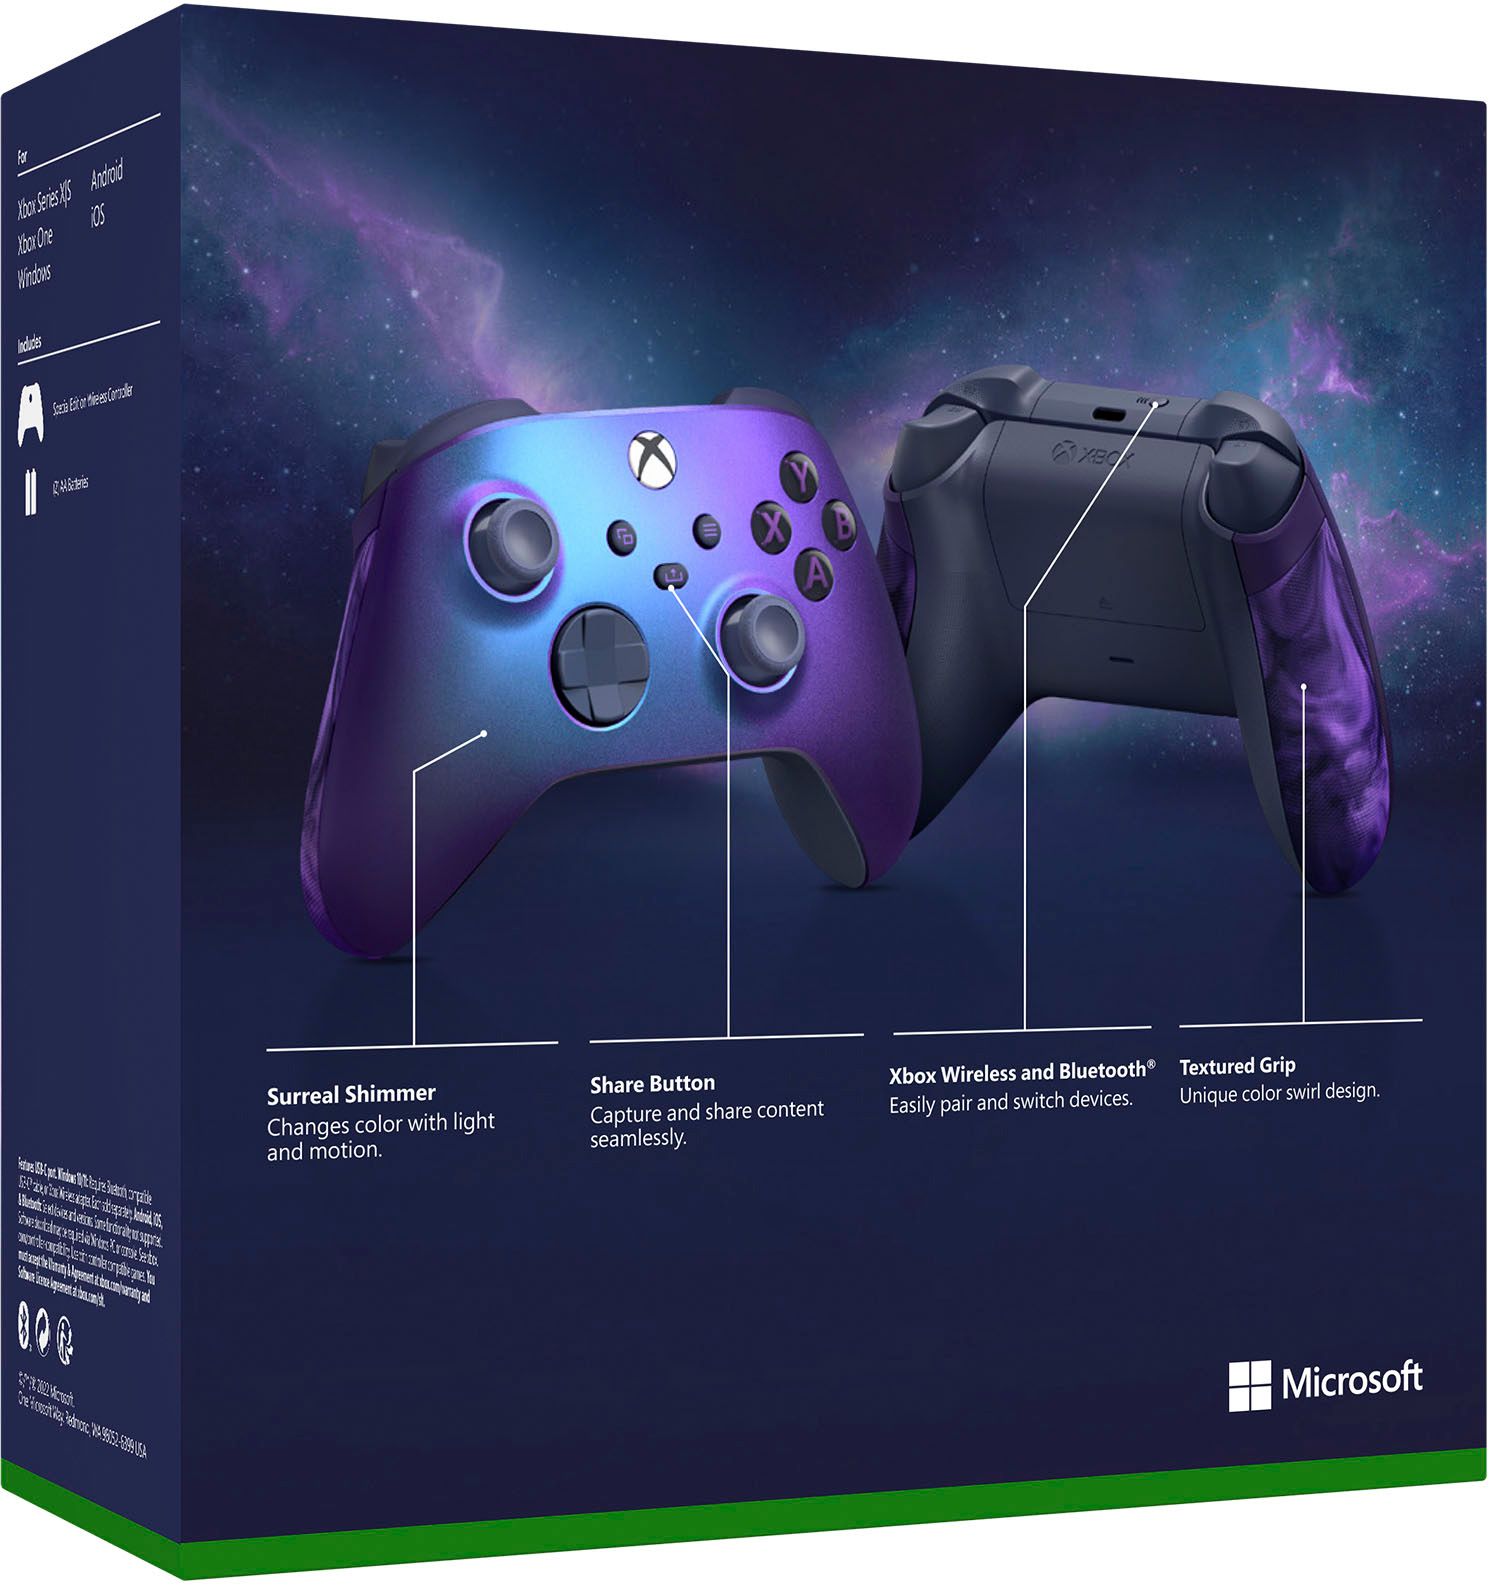 Halo Infinite Xbox Series X Limited Edition Console Pre-Order